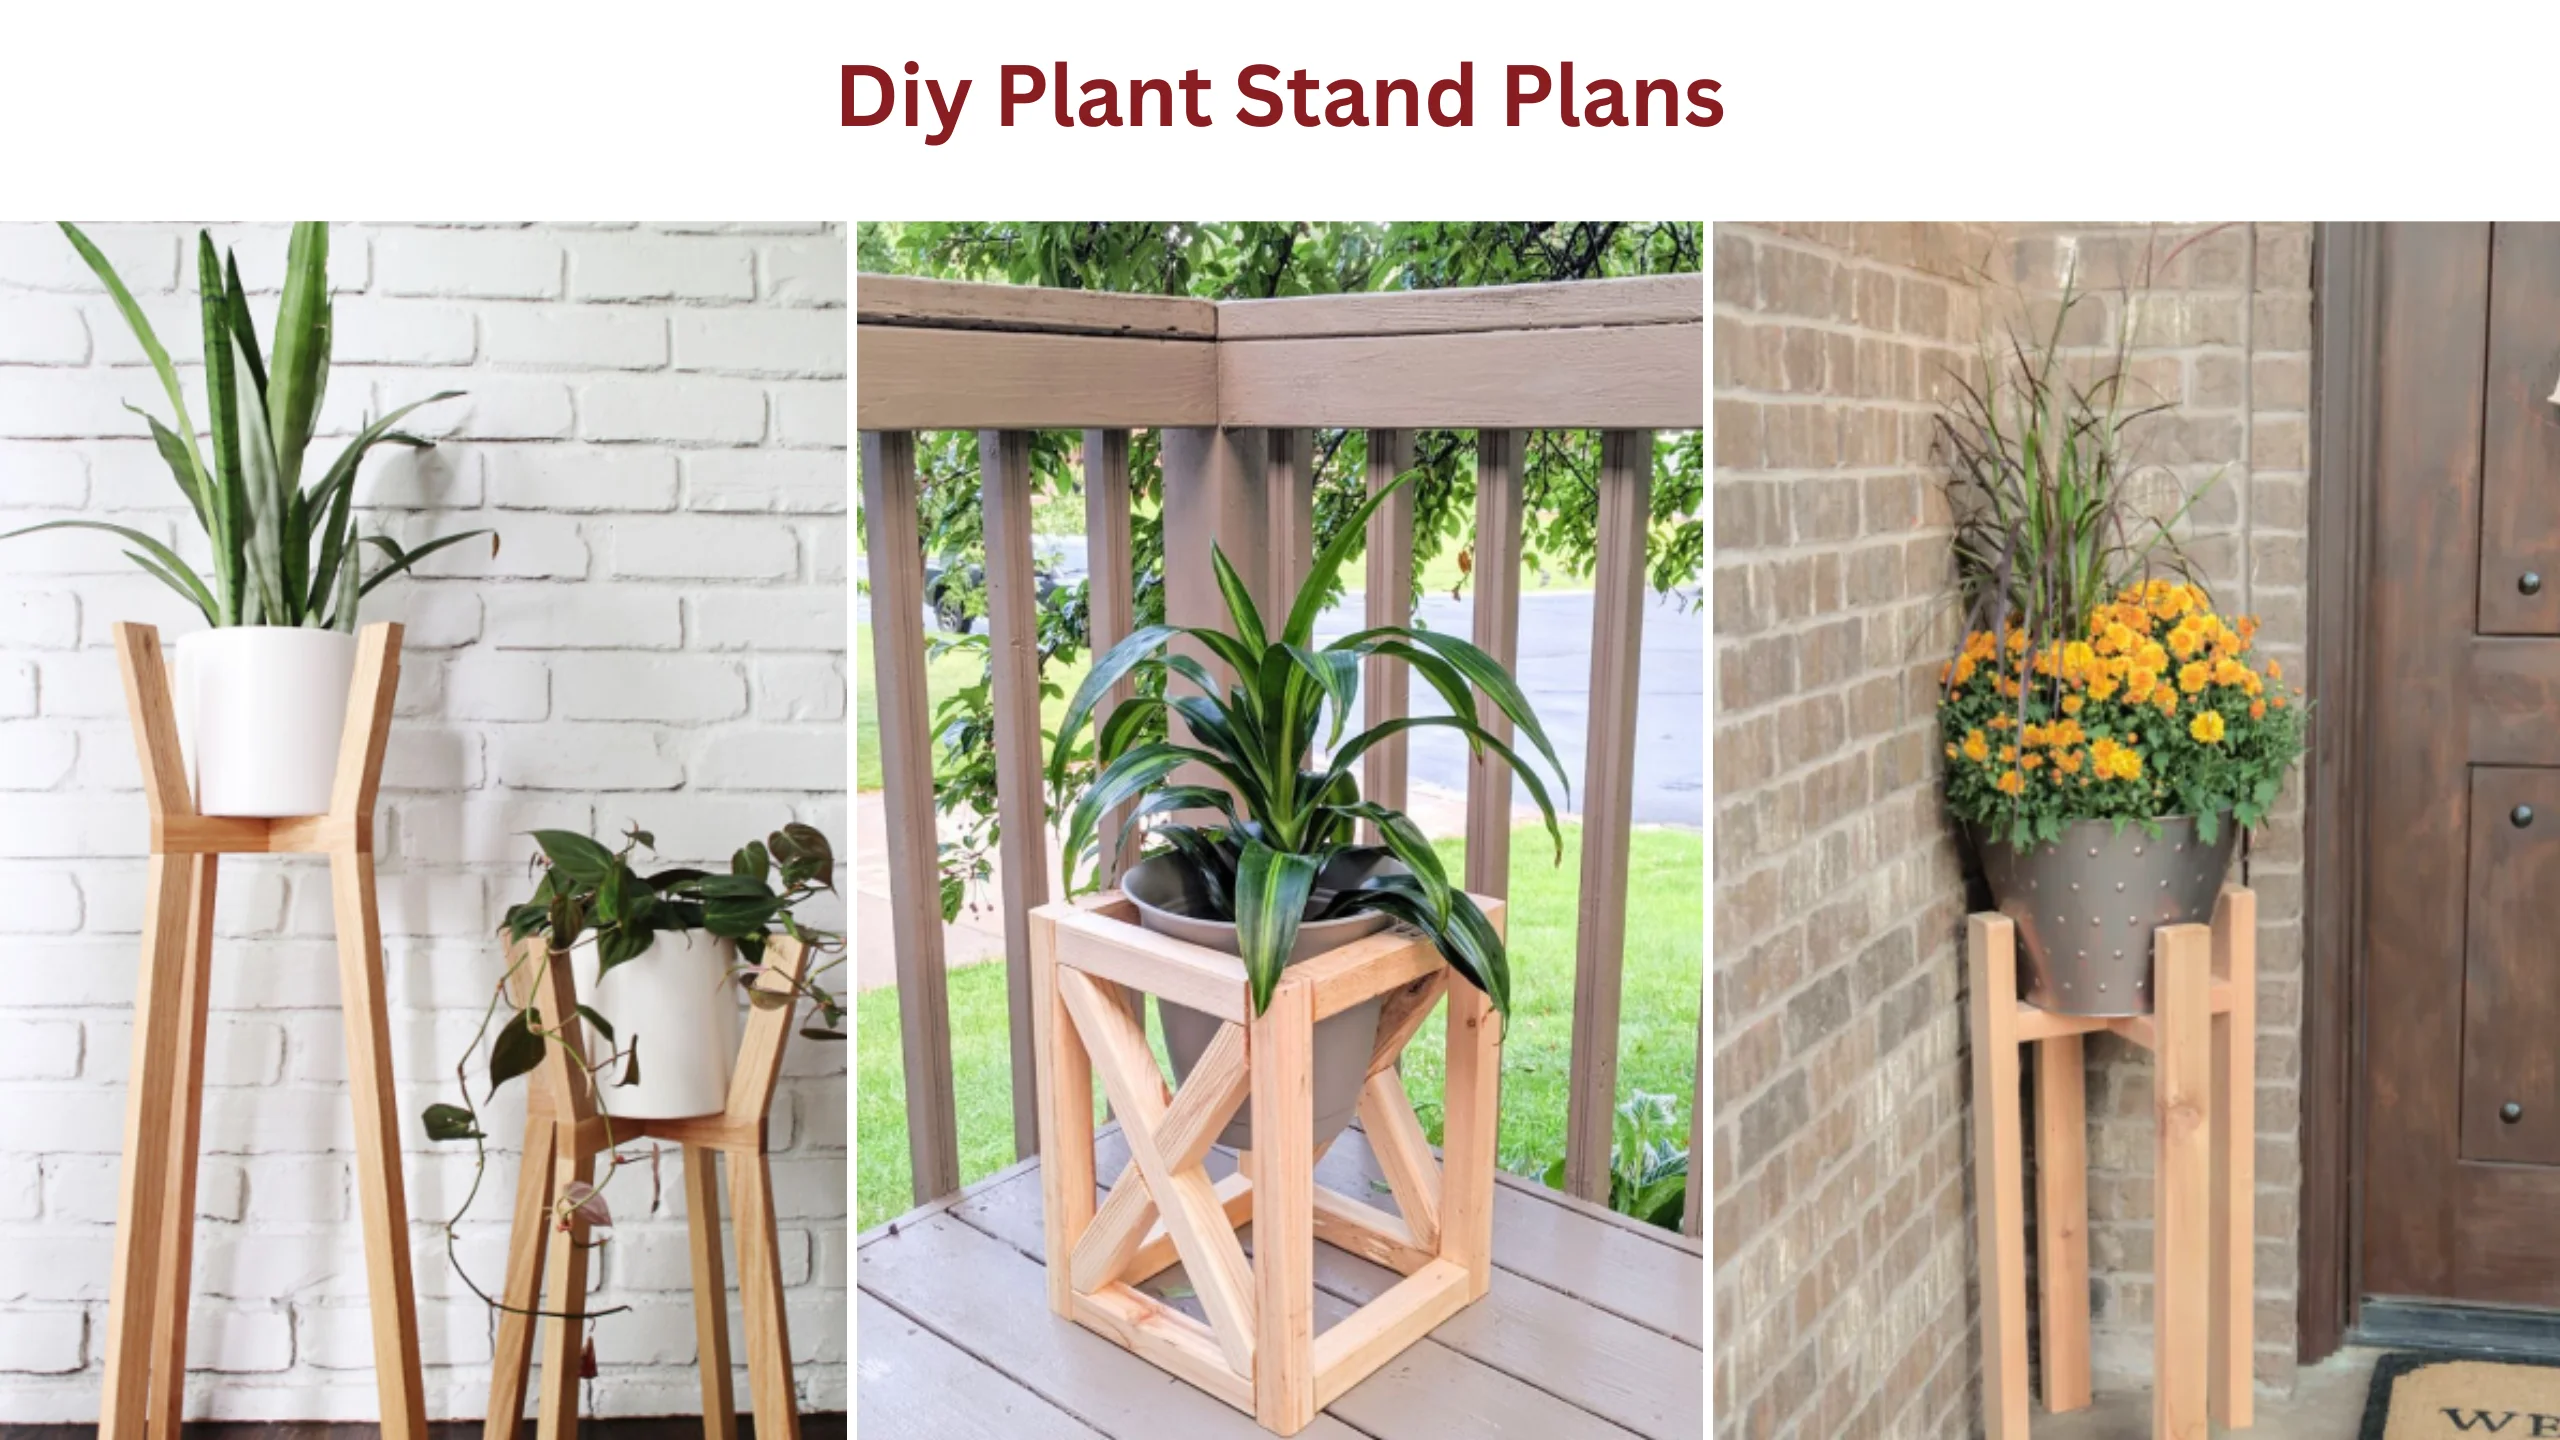 Diy plant stand plans